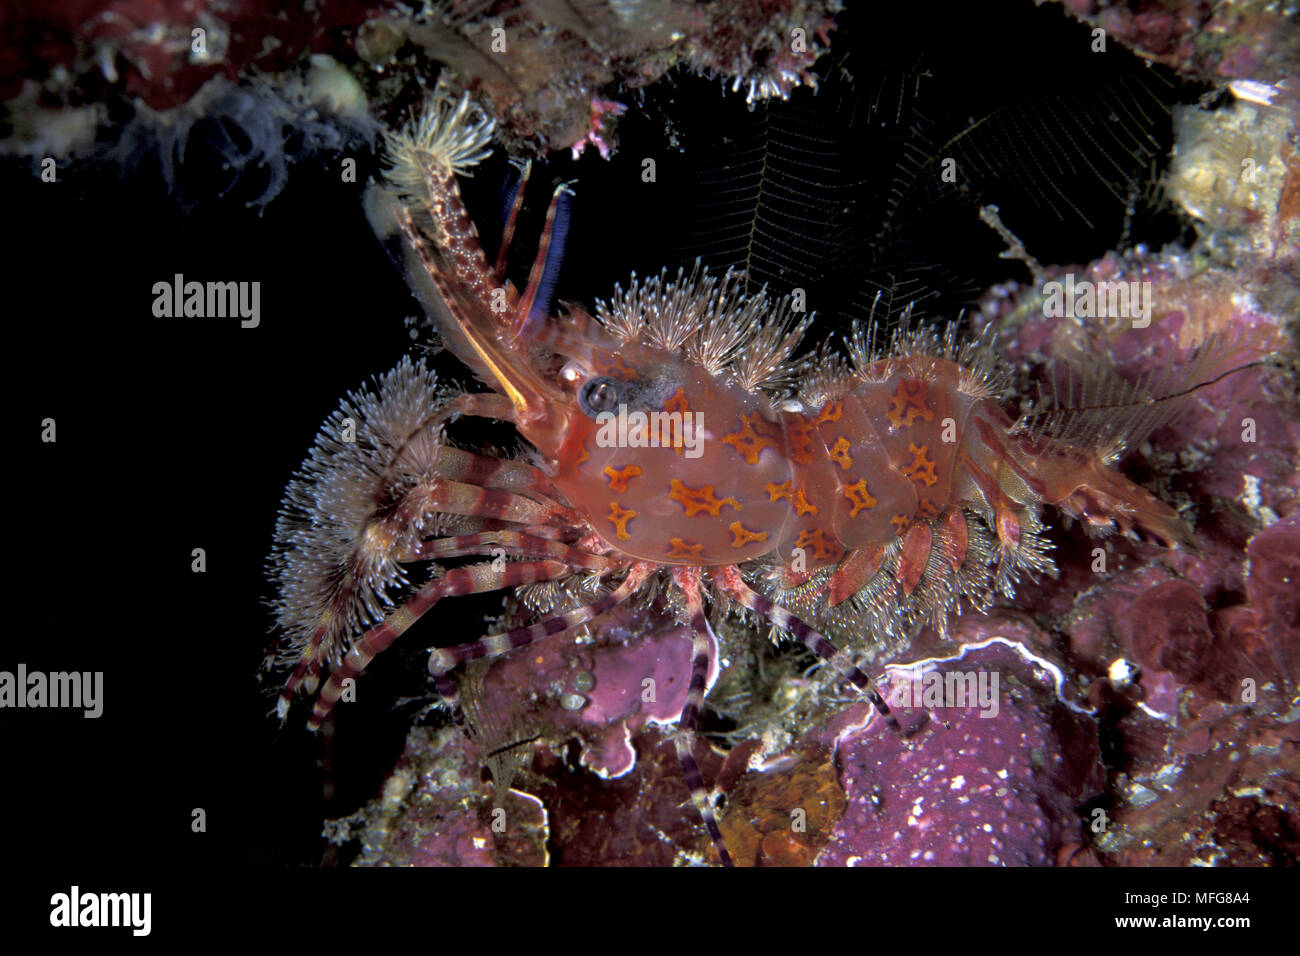 Marble shrimp, Saron sp., Witu, West New Britain, Papua New Guinea, Pacific Ocean Stock Photo